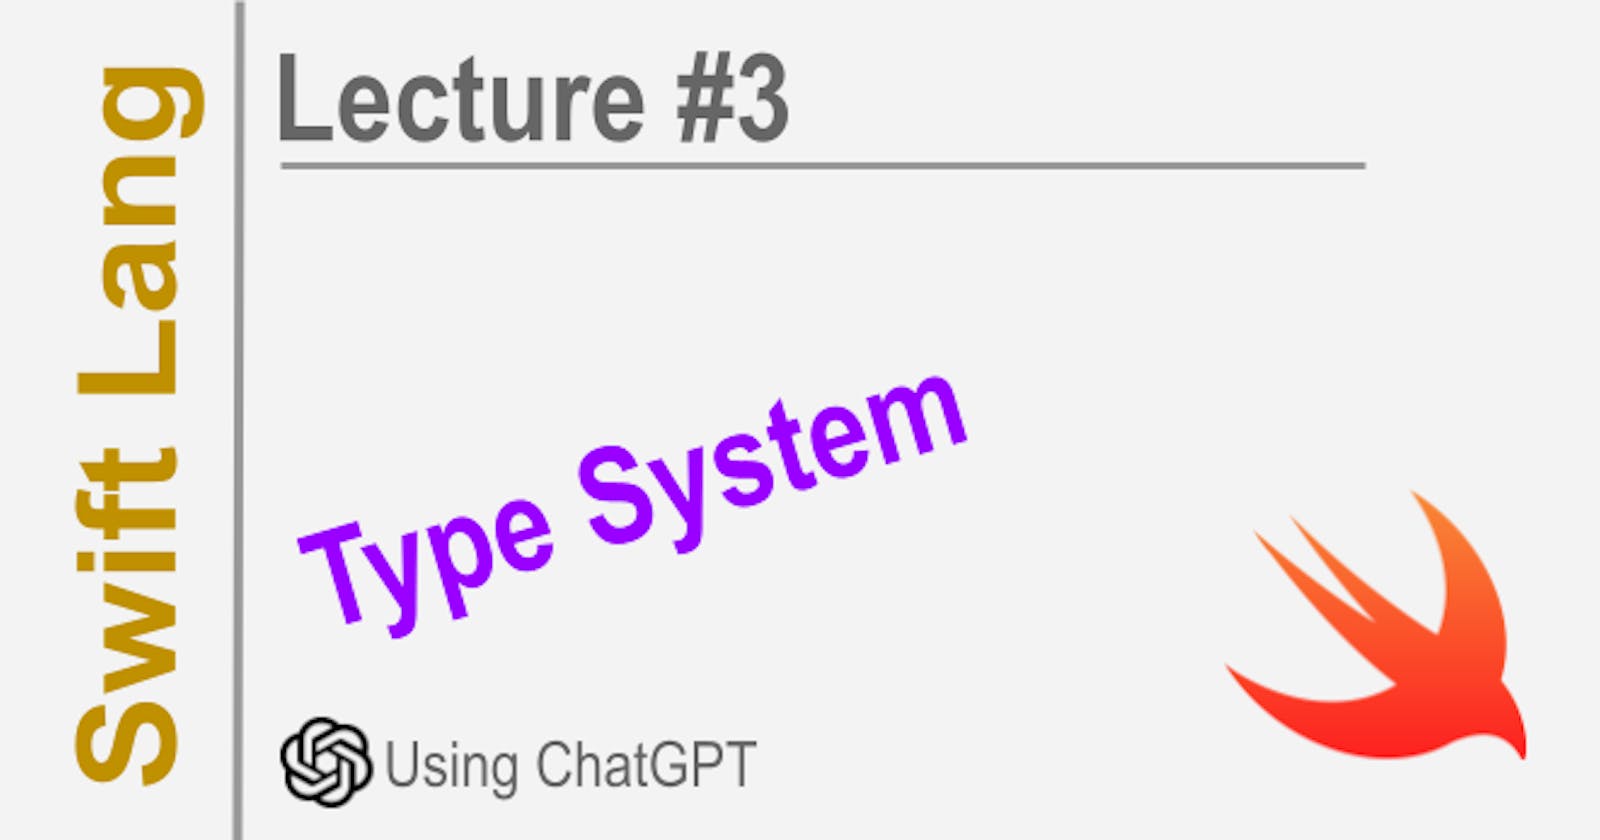 Swift: Type System